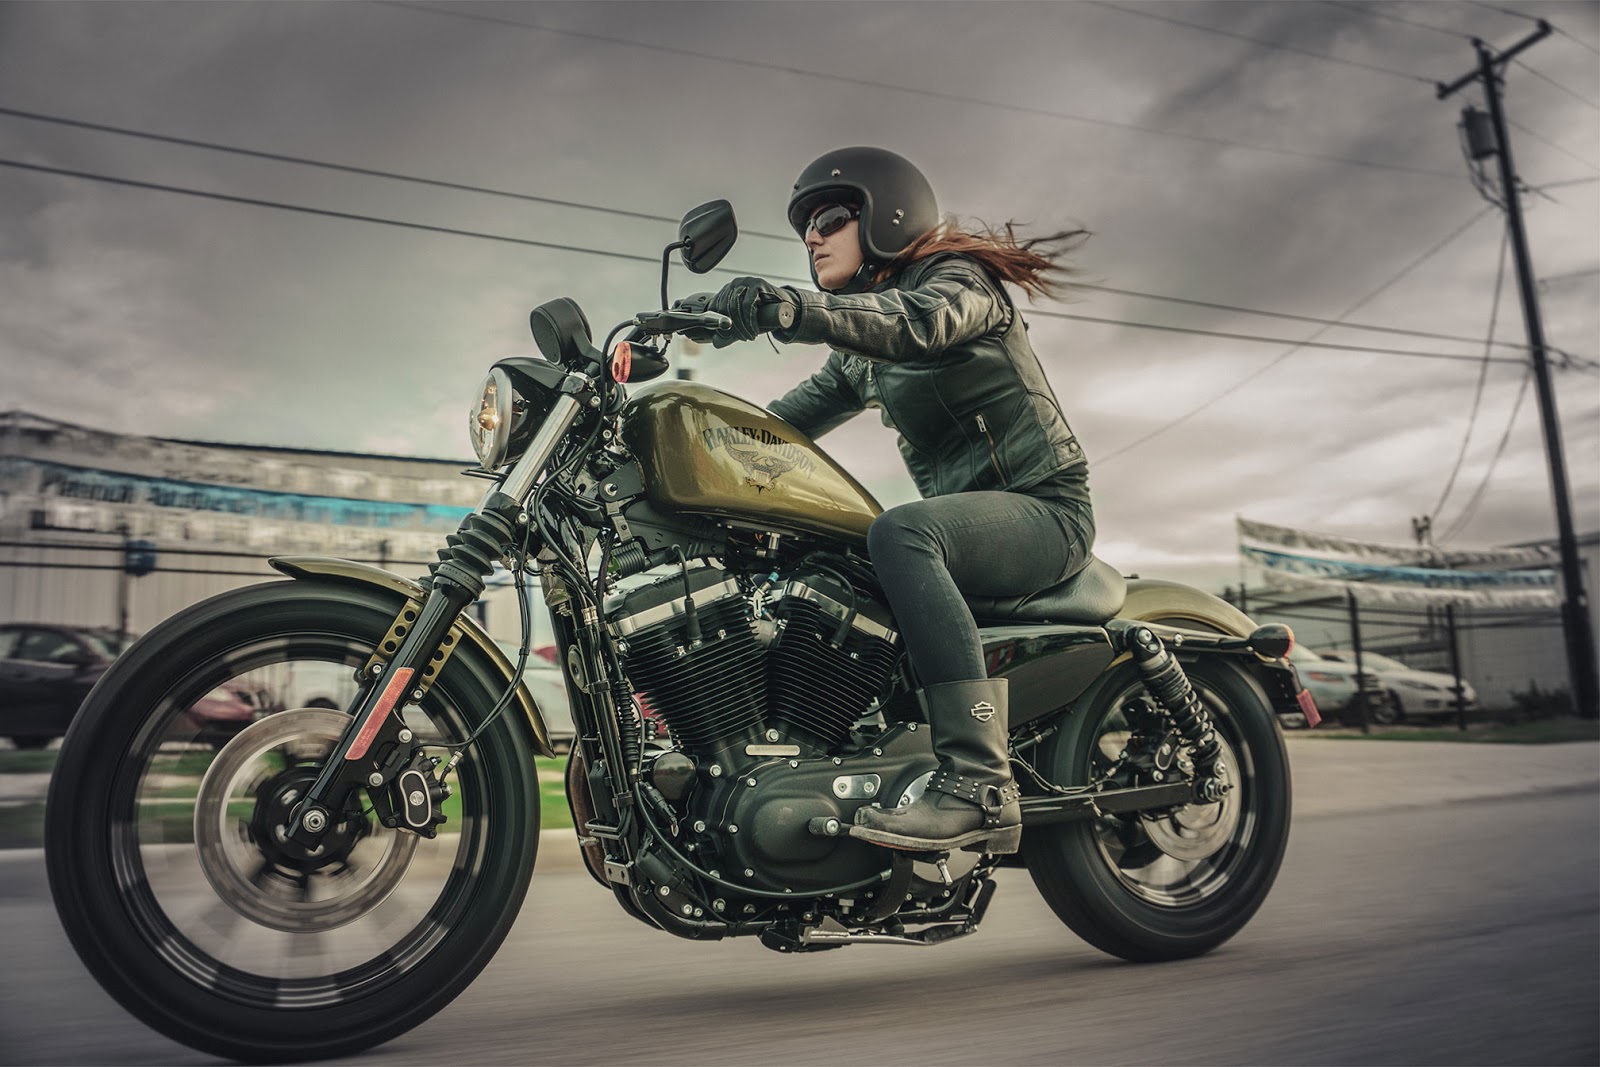 2013 Harley Sportster 883 Service Manual